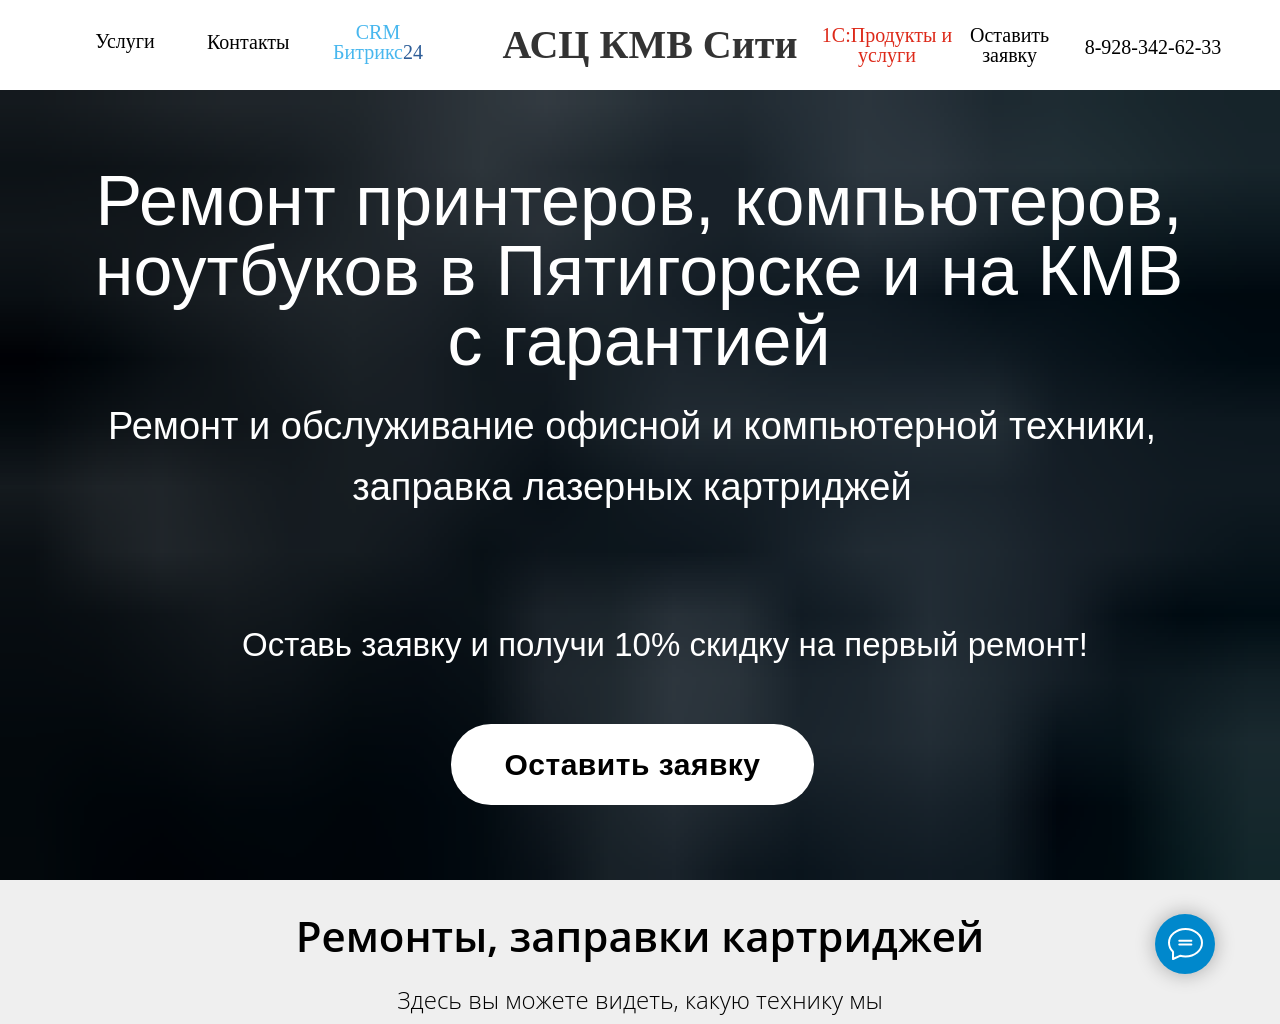 kmwcity.ru